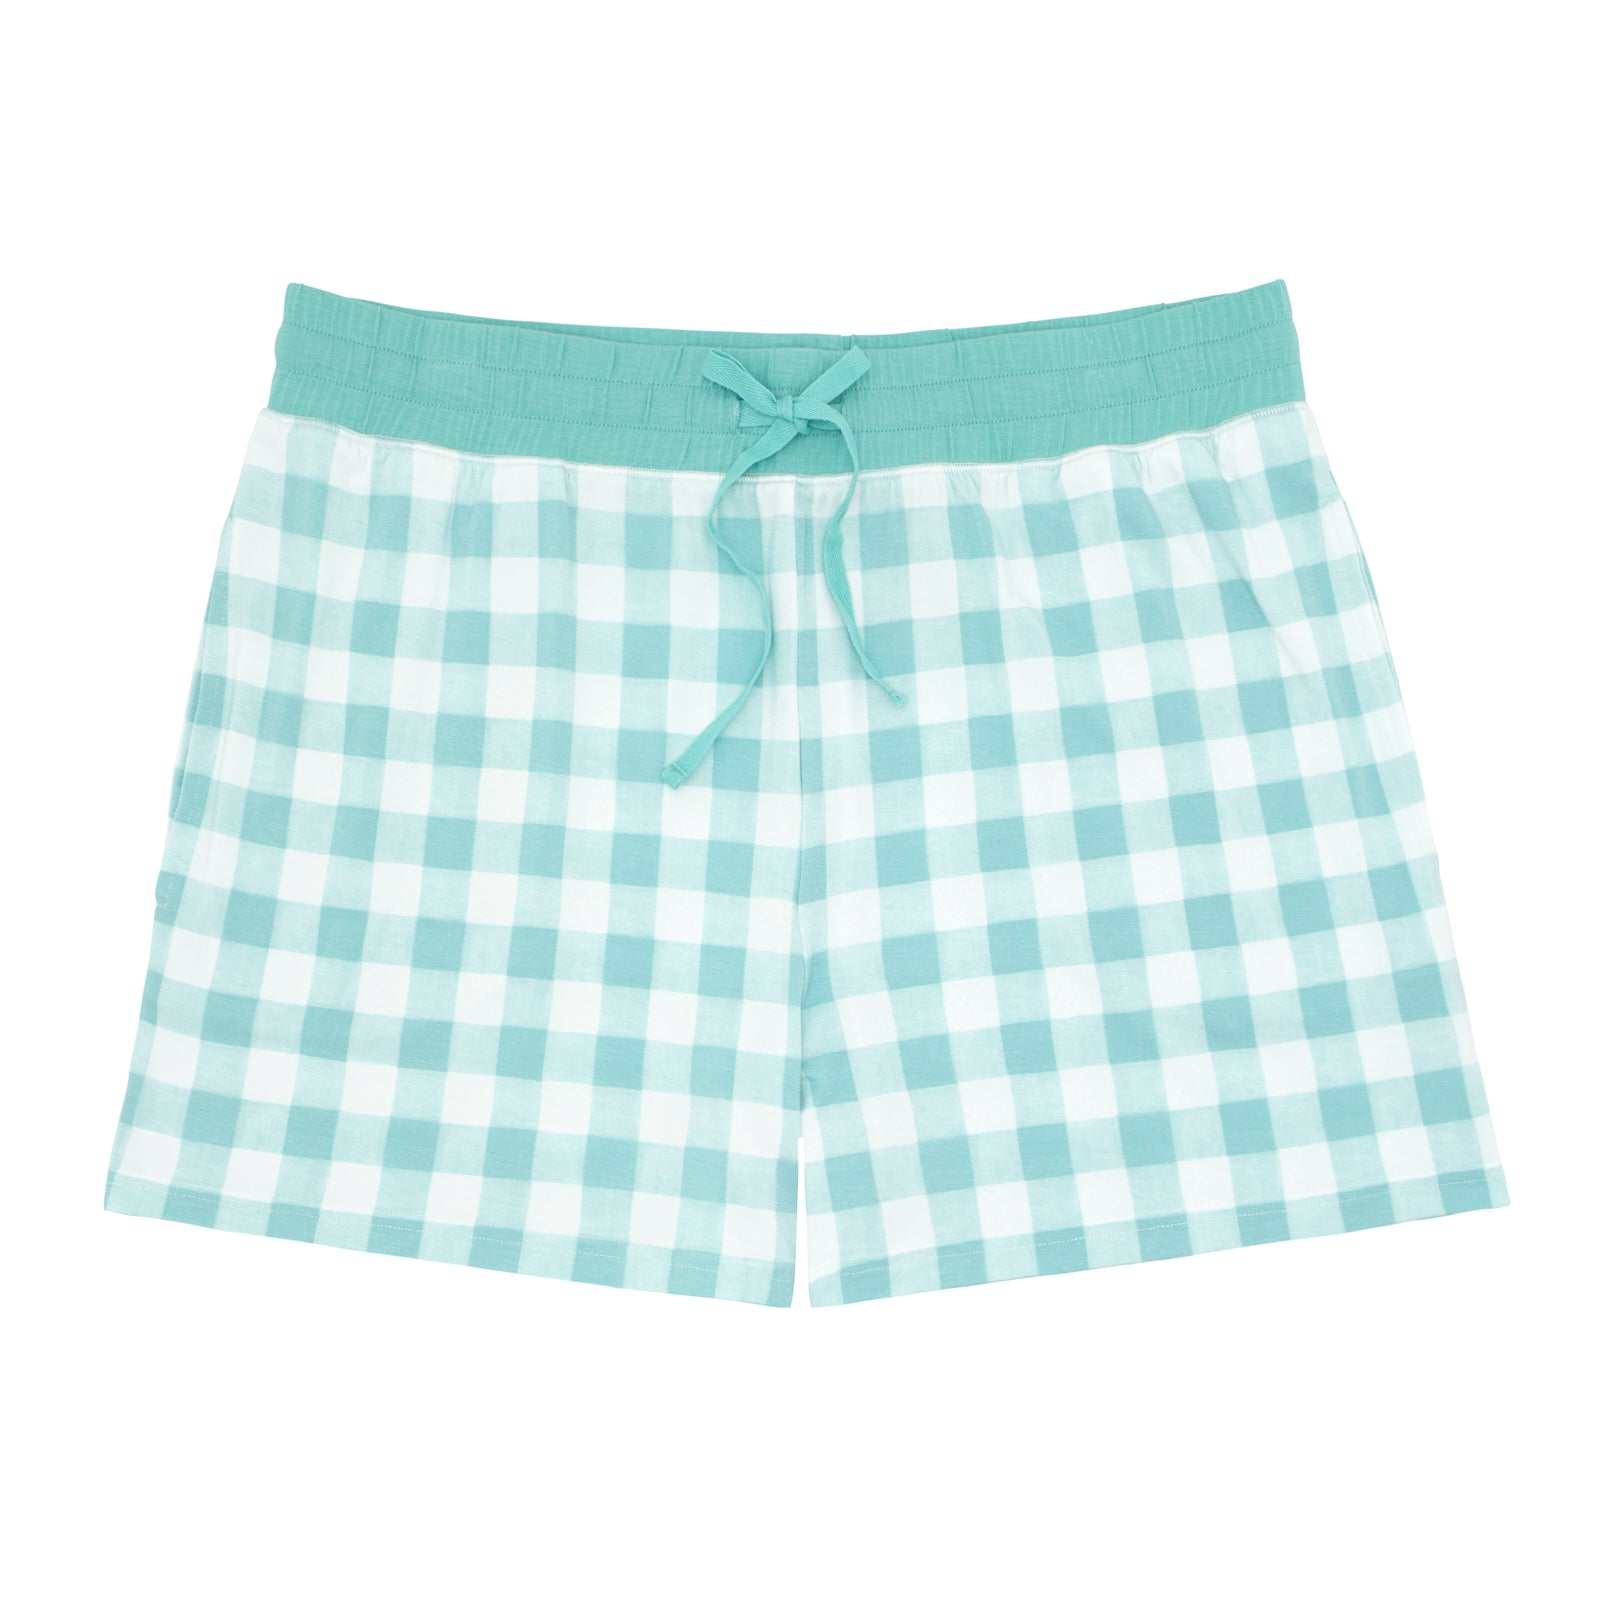 Flat lay image of Aqua Gingham women's pajama shorts